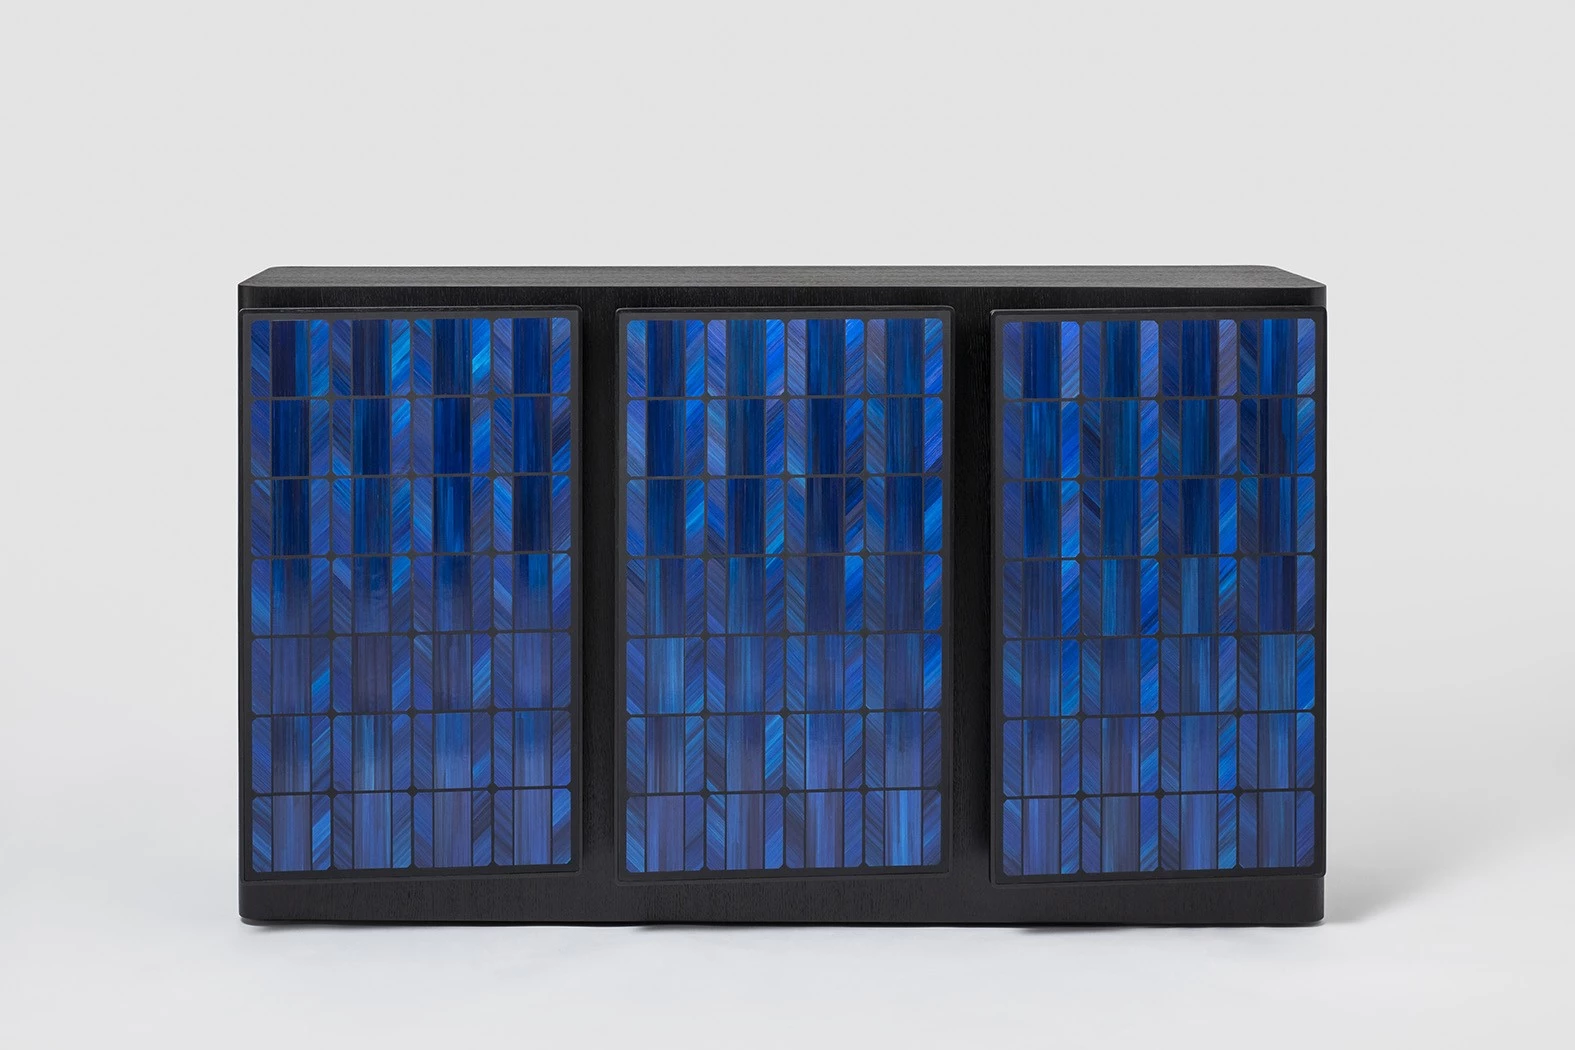 Solar storage - Jean-Baptiste Fastrez - Storage - Galerie kreo